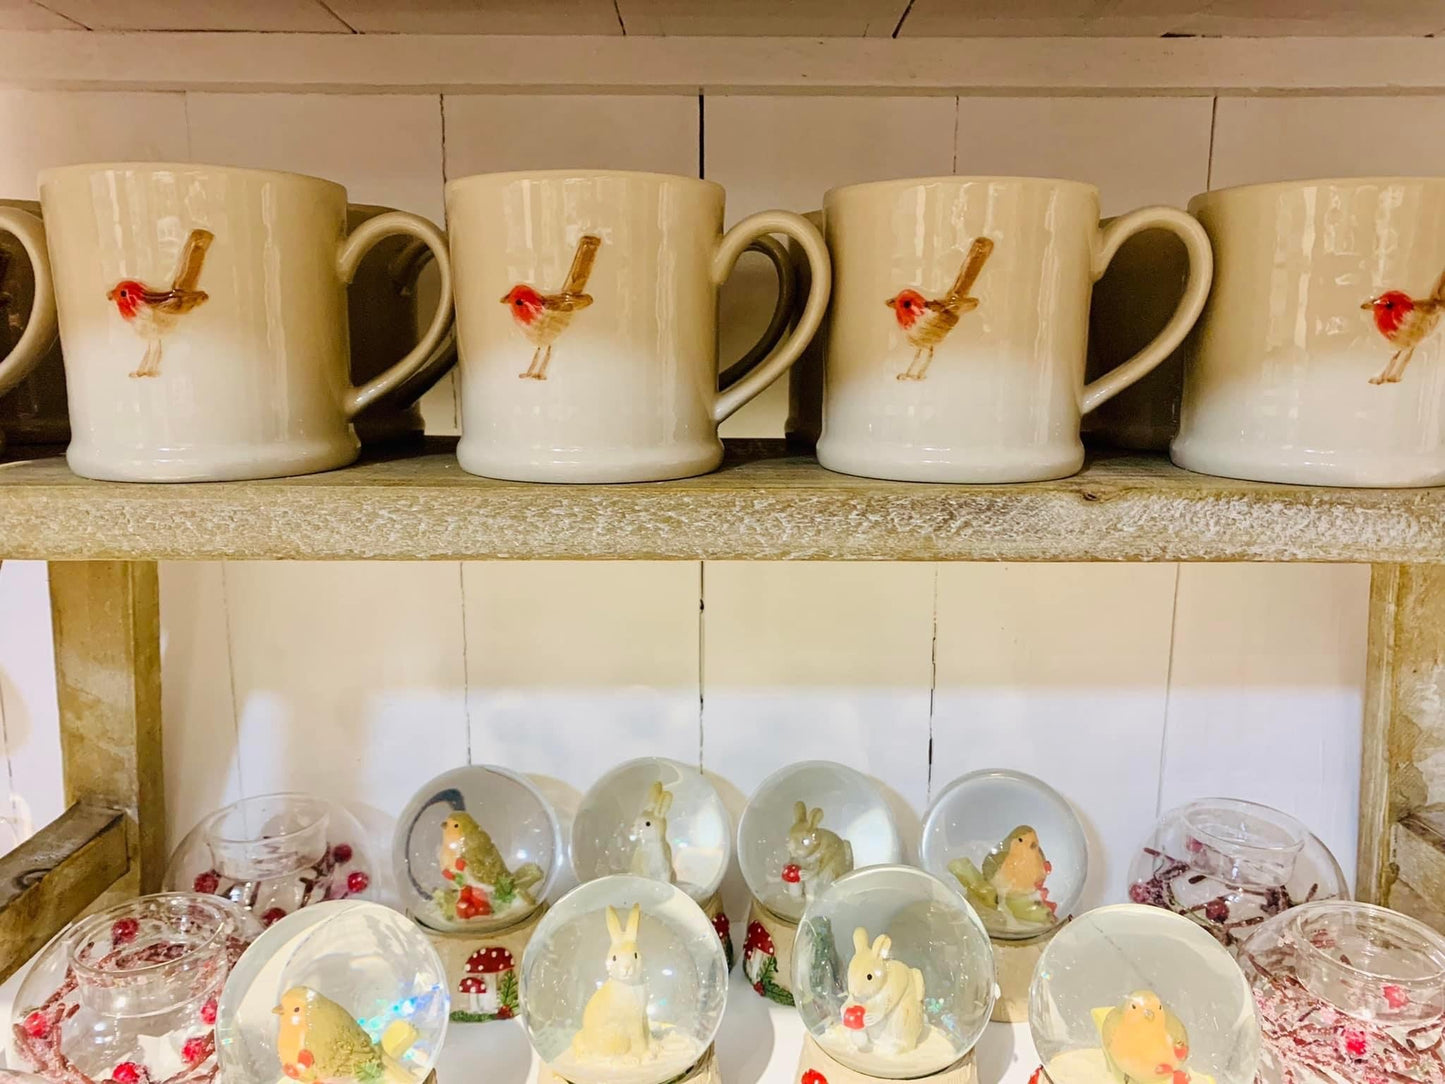 Ceramic Mini Christmas Mugs & Jugs - Gingerbread/Christmas Pudding/Robin